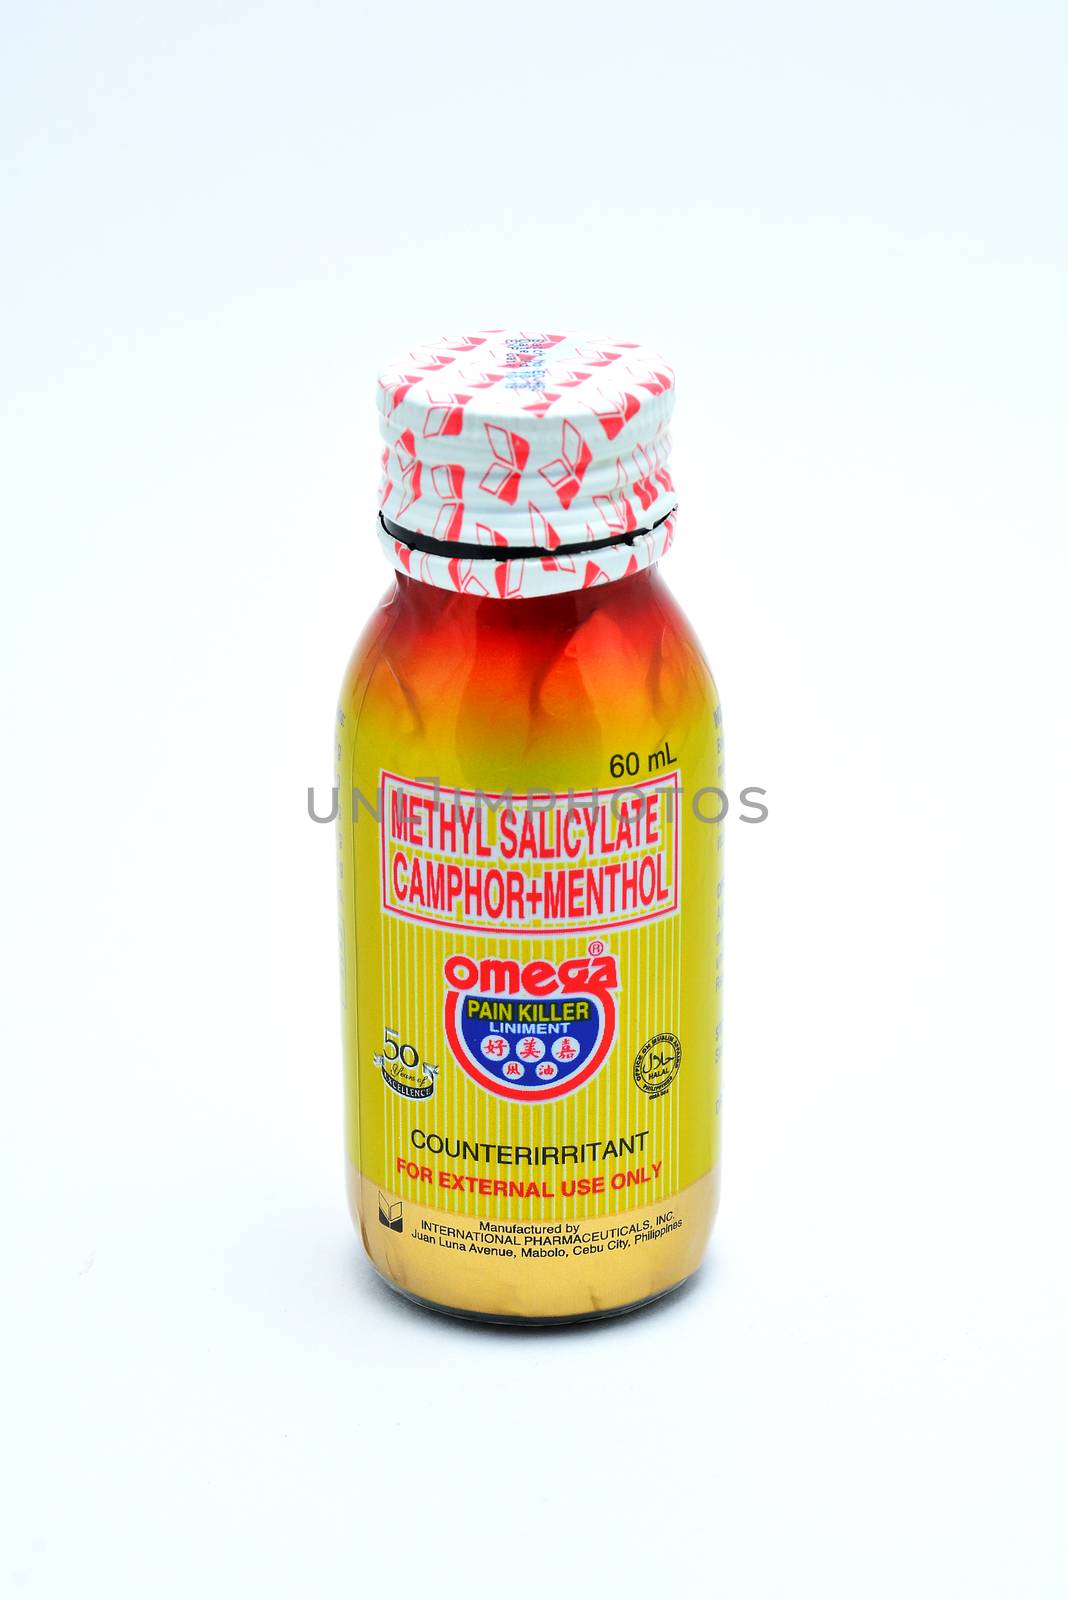 MANILA, PH - JULY 10 - Omega pain killer liniment bottle on July 10, 2020 in Manila, Philippines.